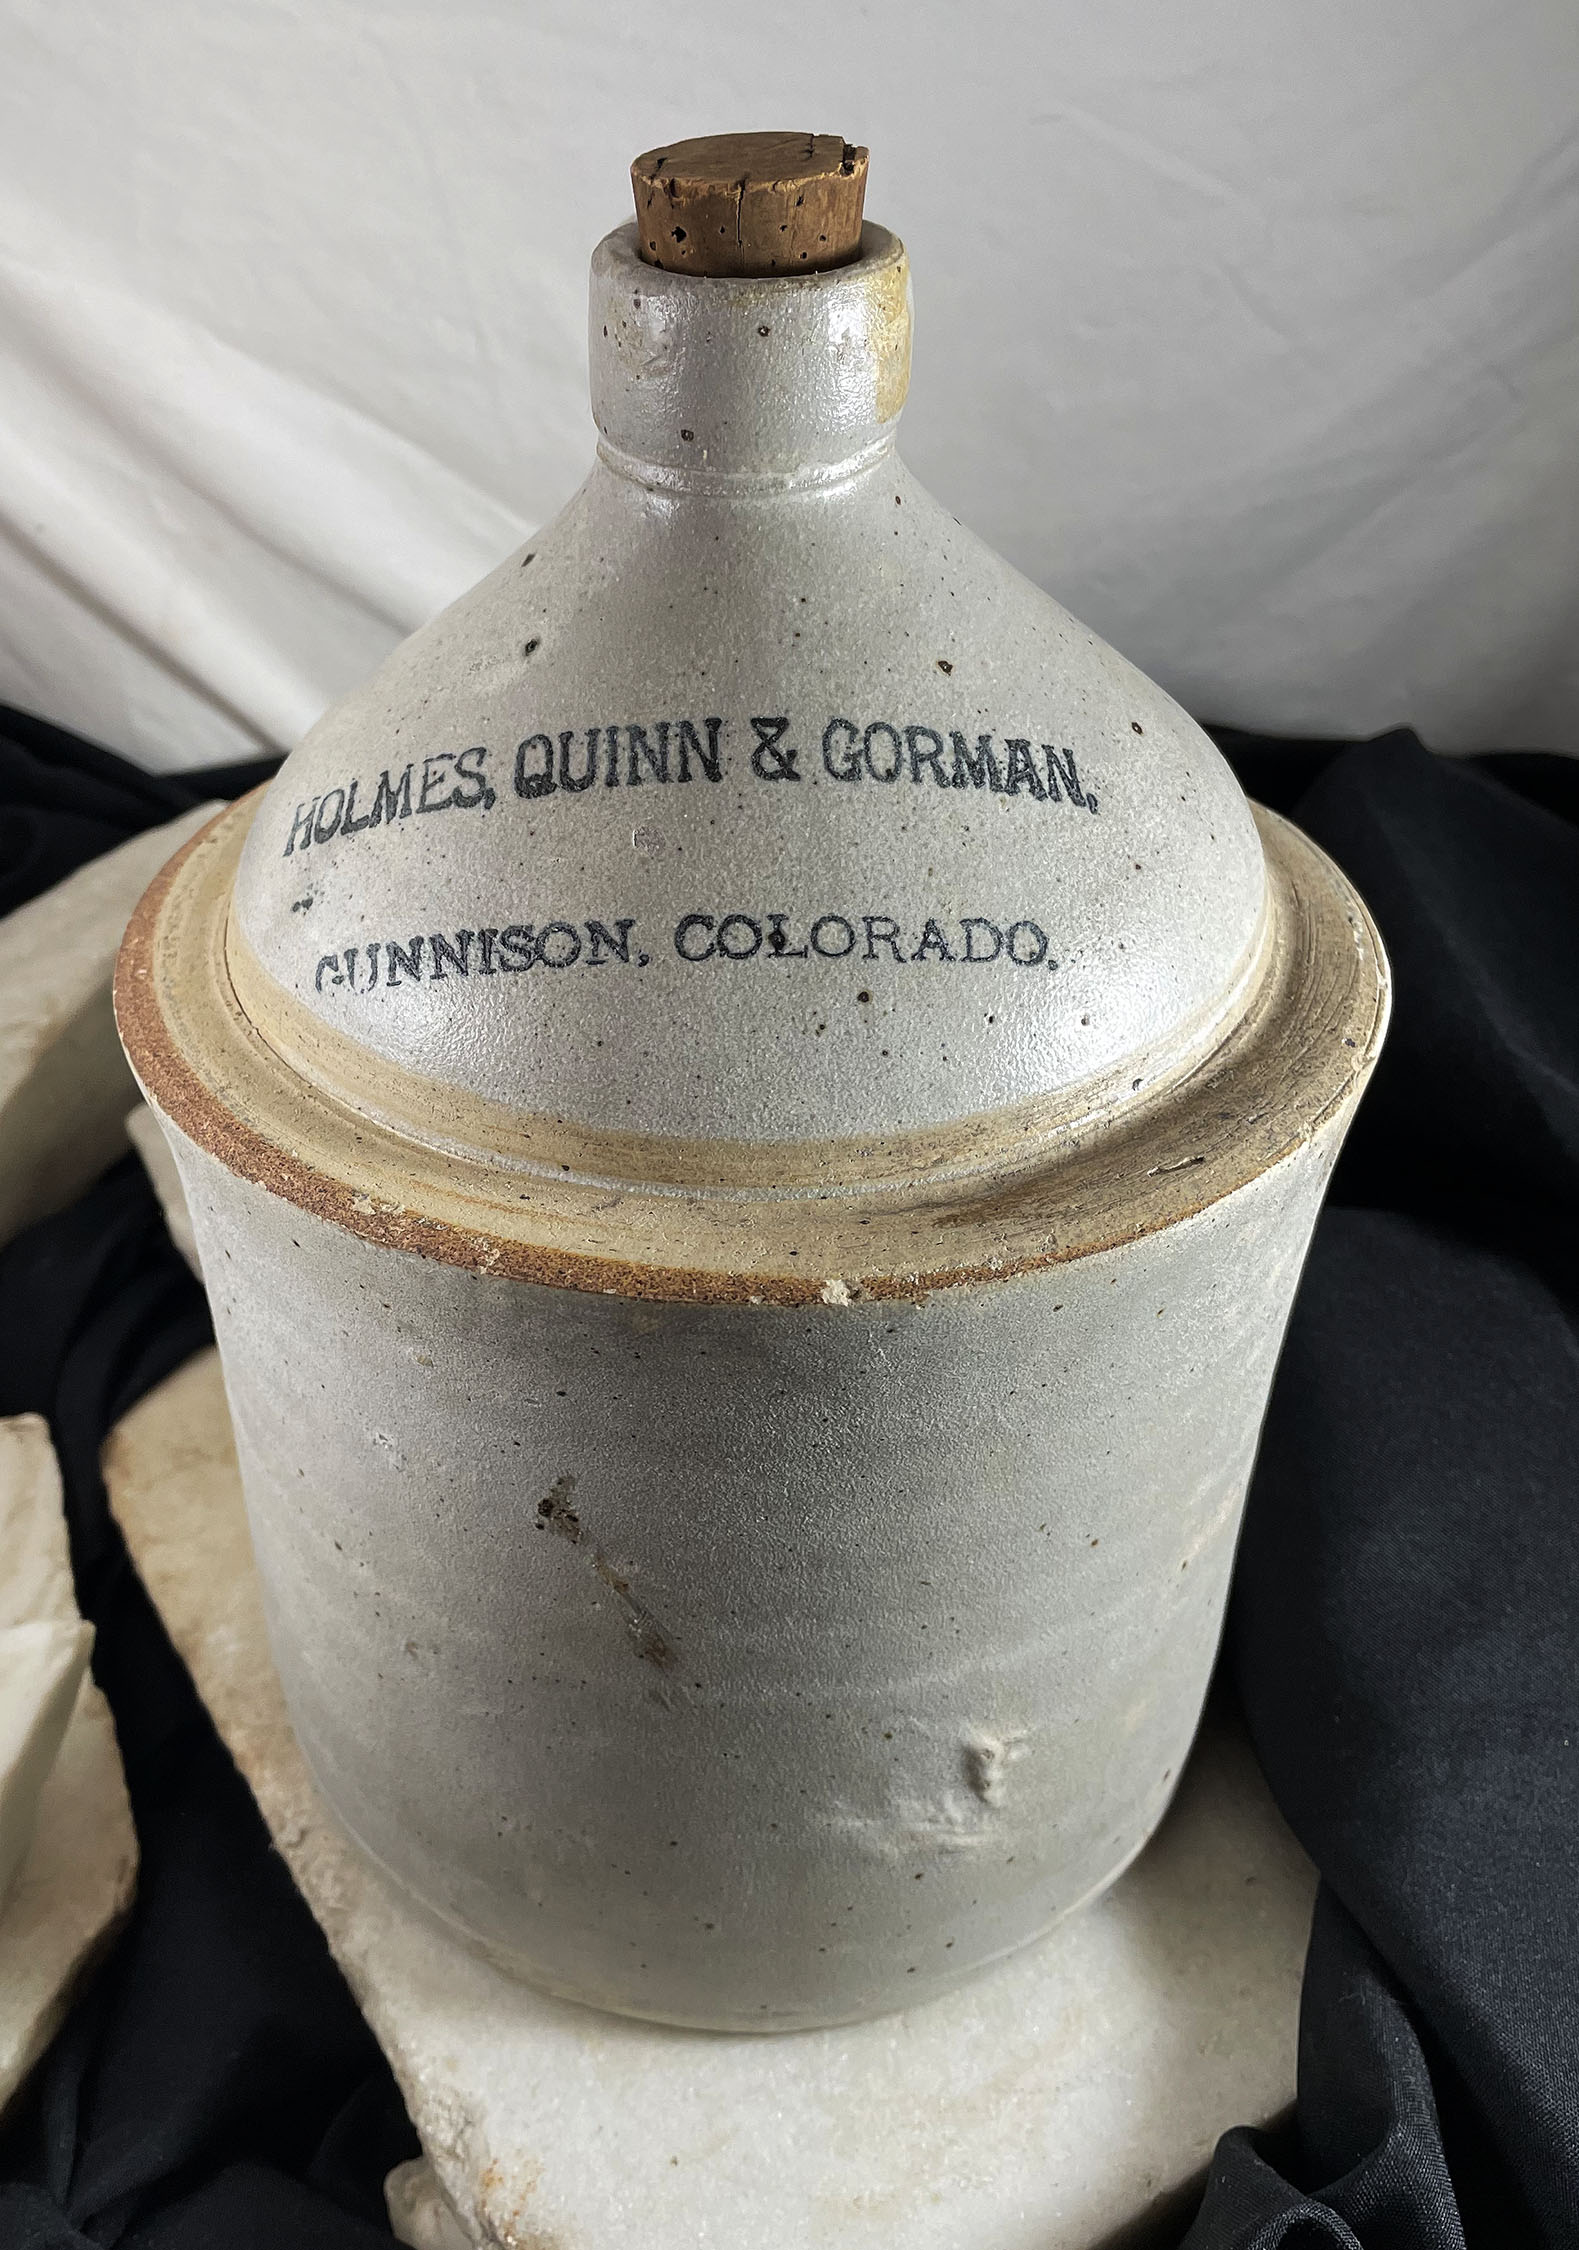 HOLMES, QUINN & GORMAN whiskey jug, Gunnison, Colorado, 1899